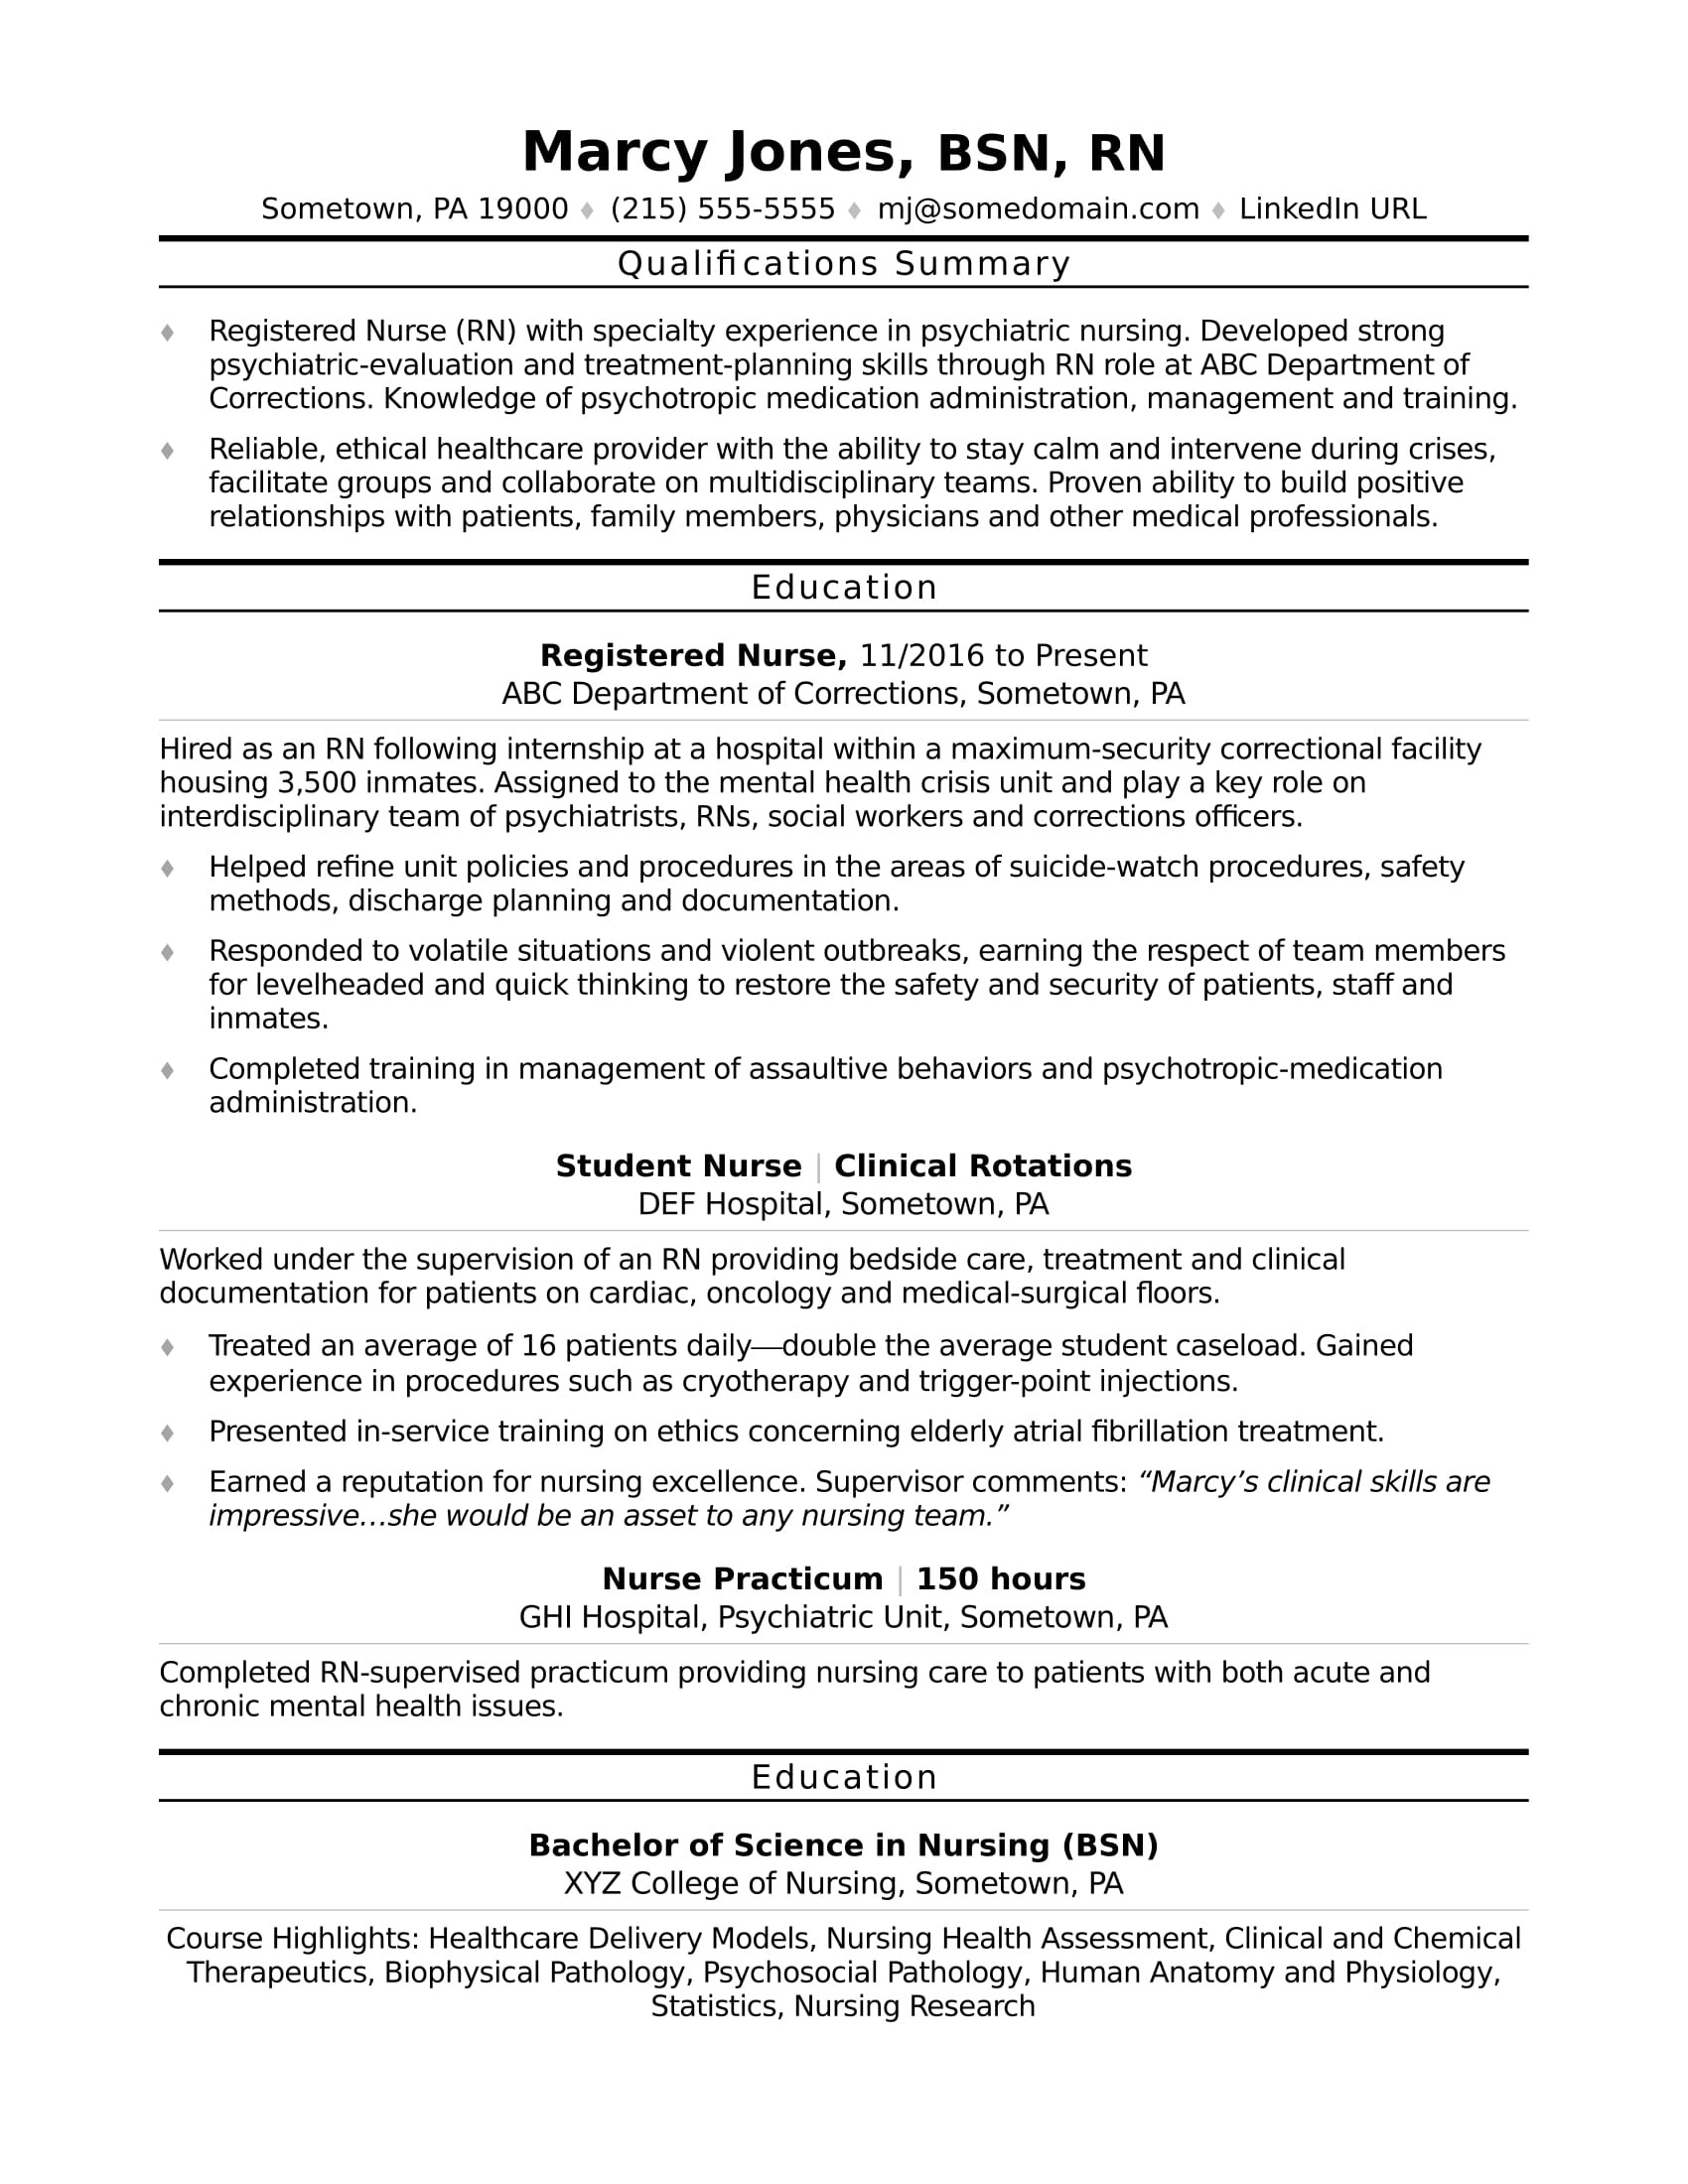 Sample Resume Registered Nurse for Masters Degree Entry-level Nurse Resume Monster.com